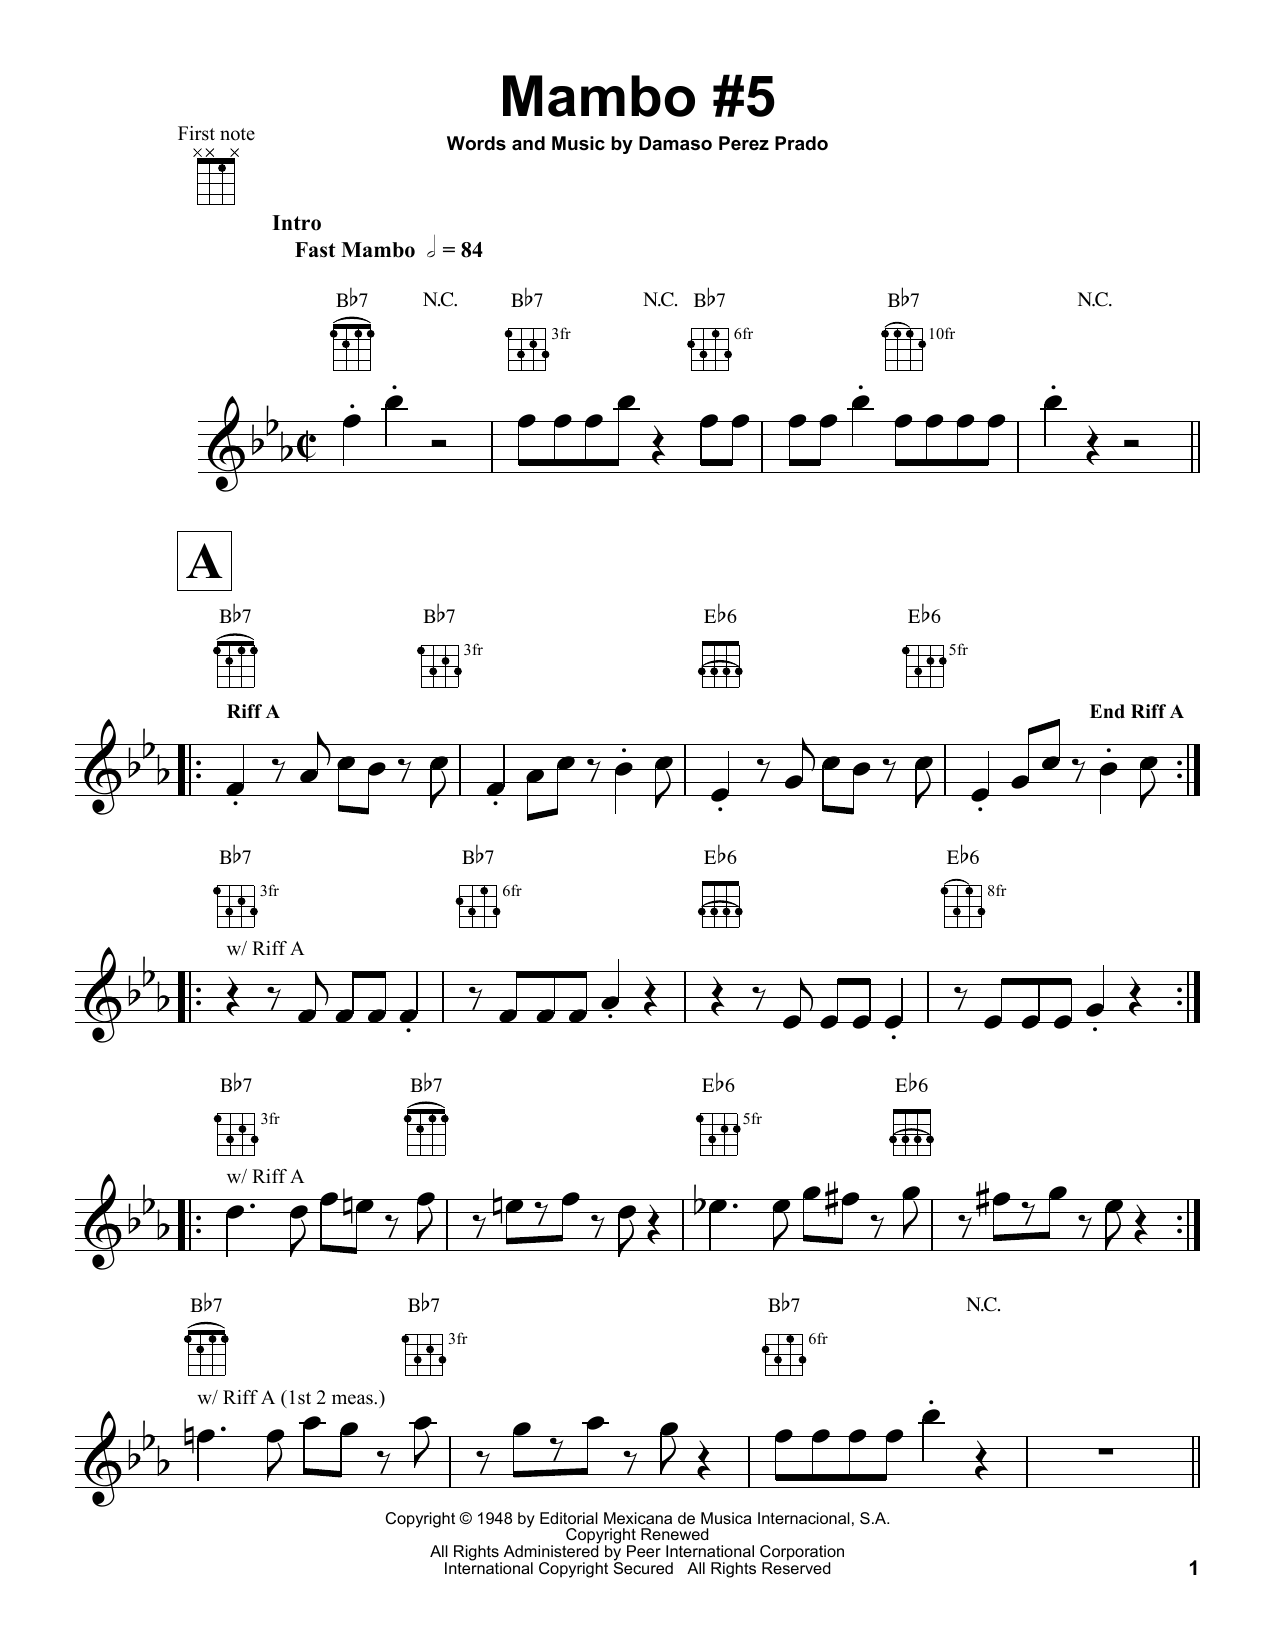 Damaso Perez Prado Mambo #5 Sheet Music Notes & Chords for Ukulele - Download or Print PDF